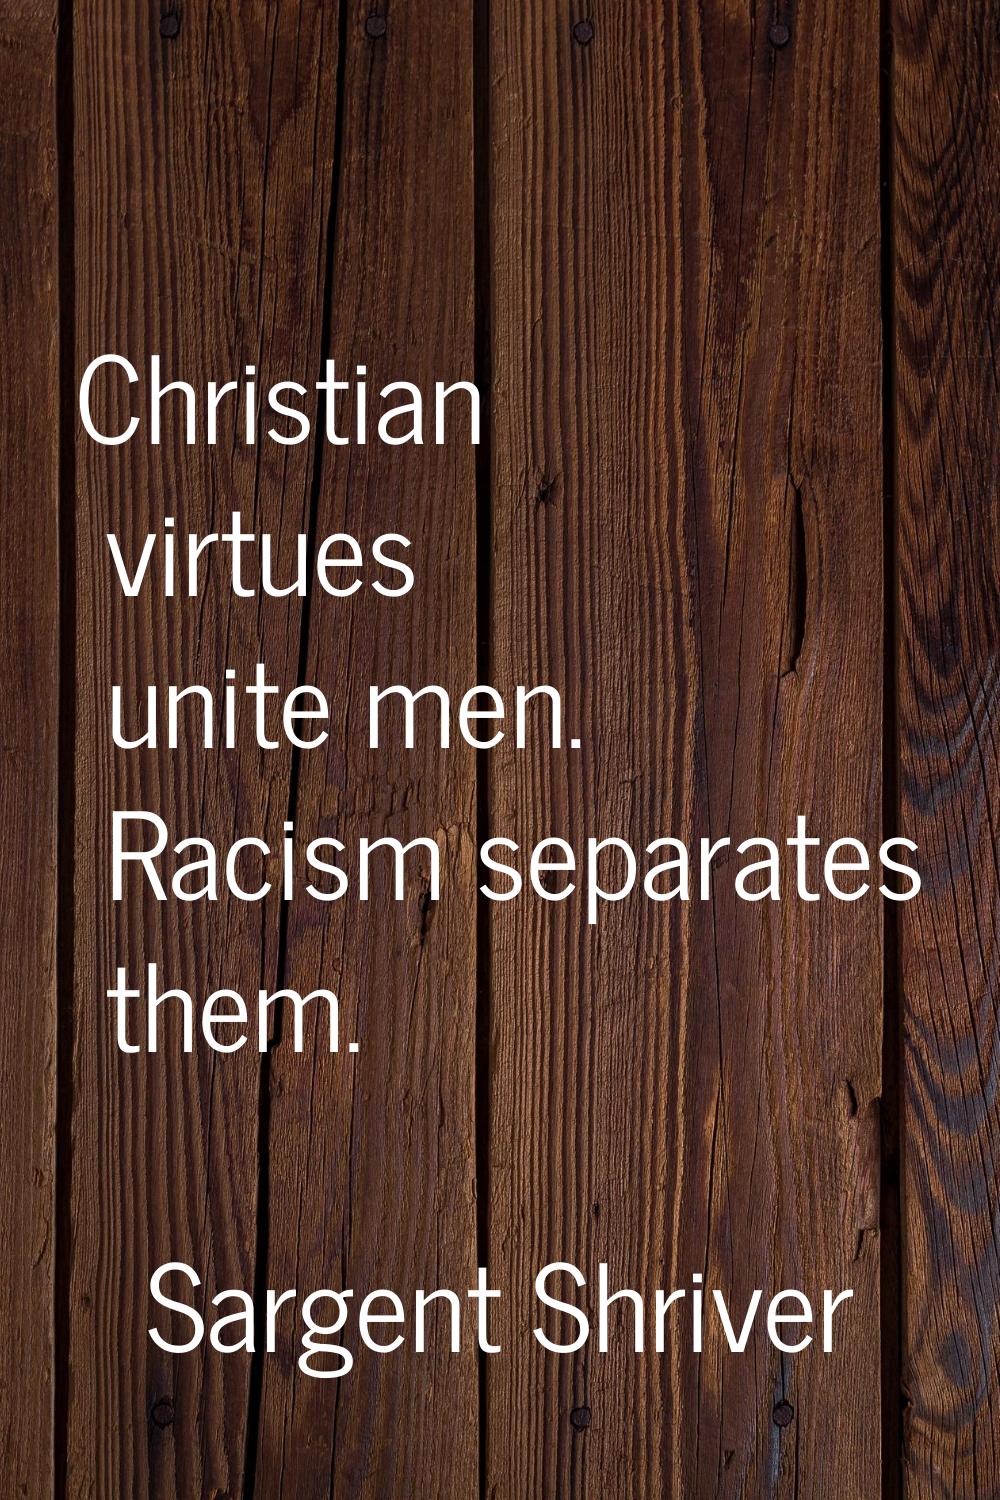 Christian virtues unite men. Racism separates them.